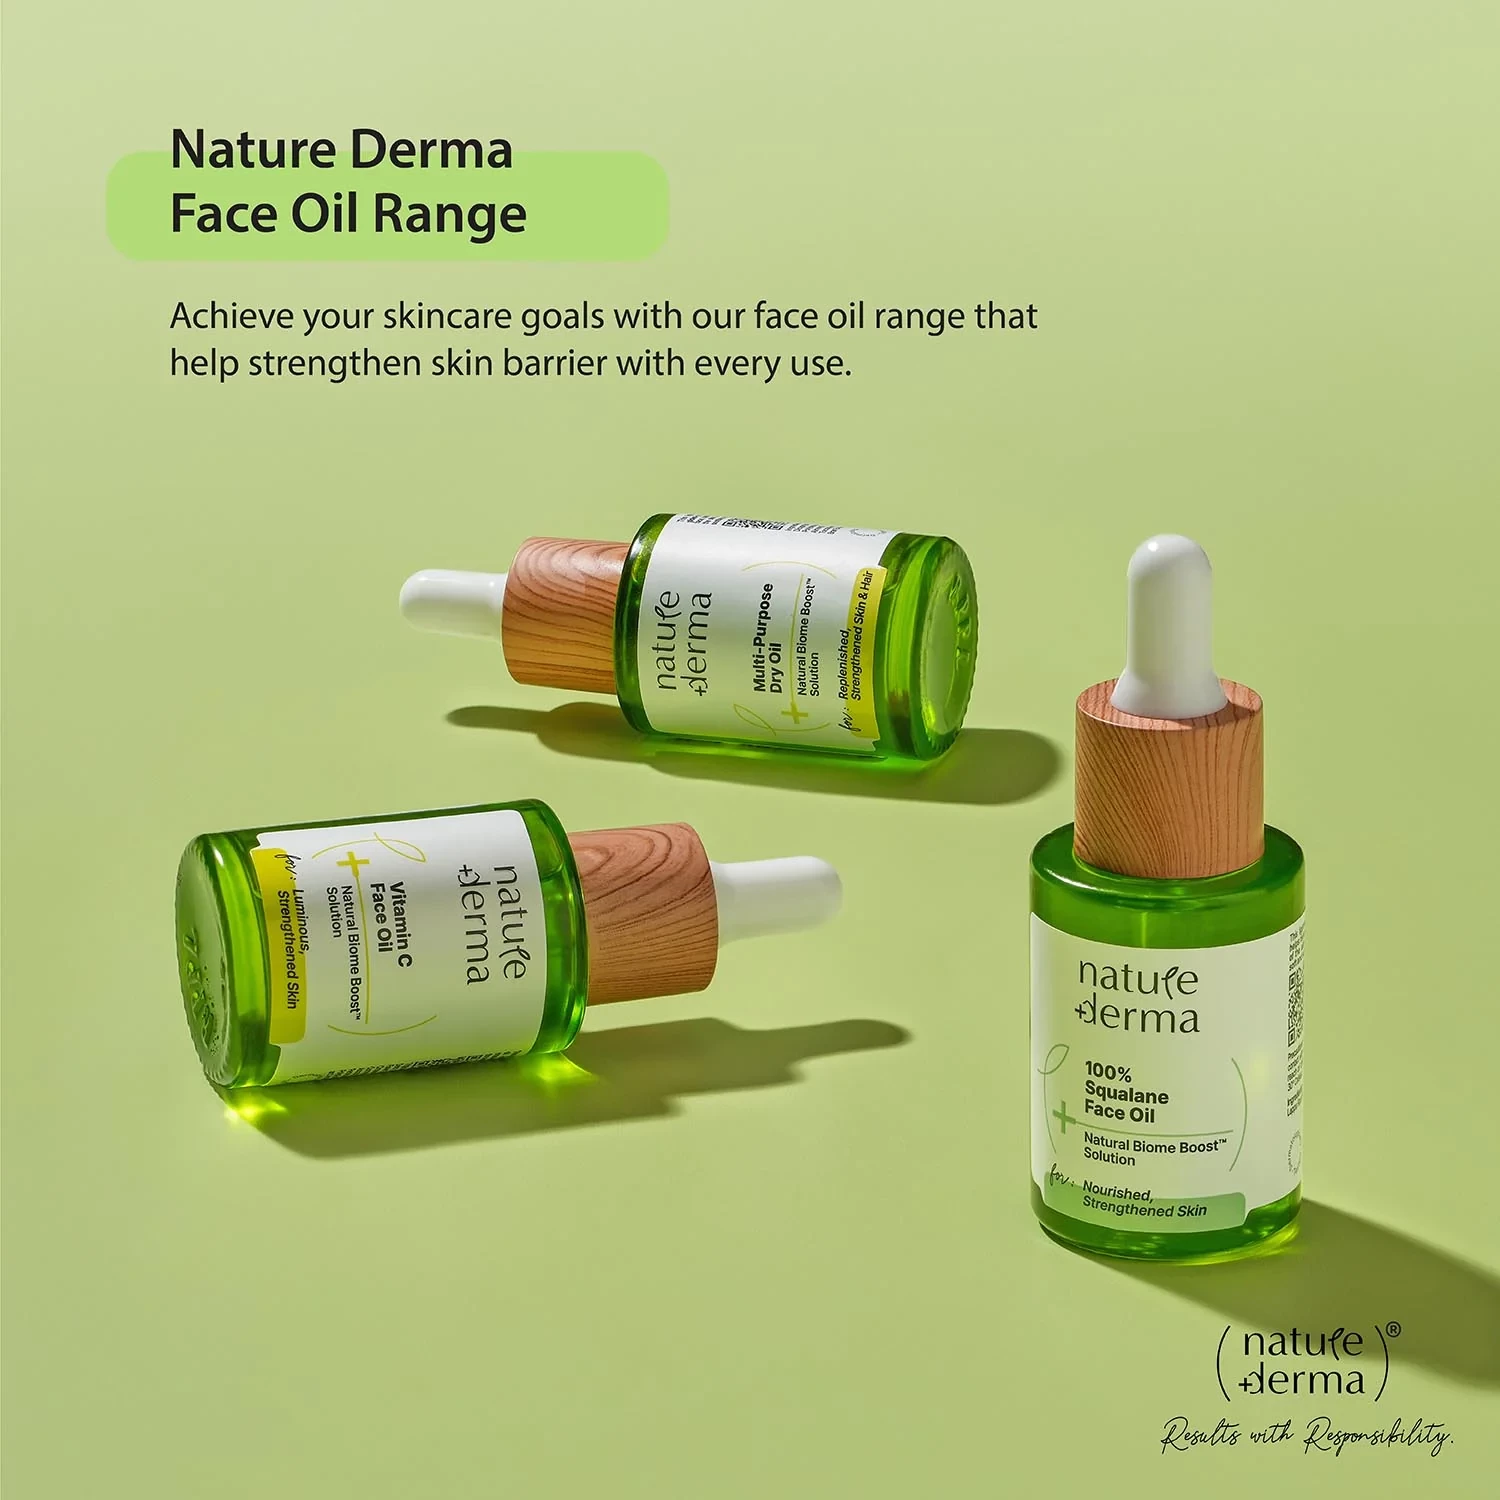 Nature Derma Vitamin C Face Oil, 30Ml